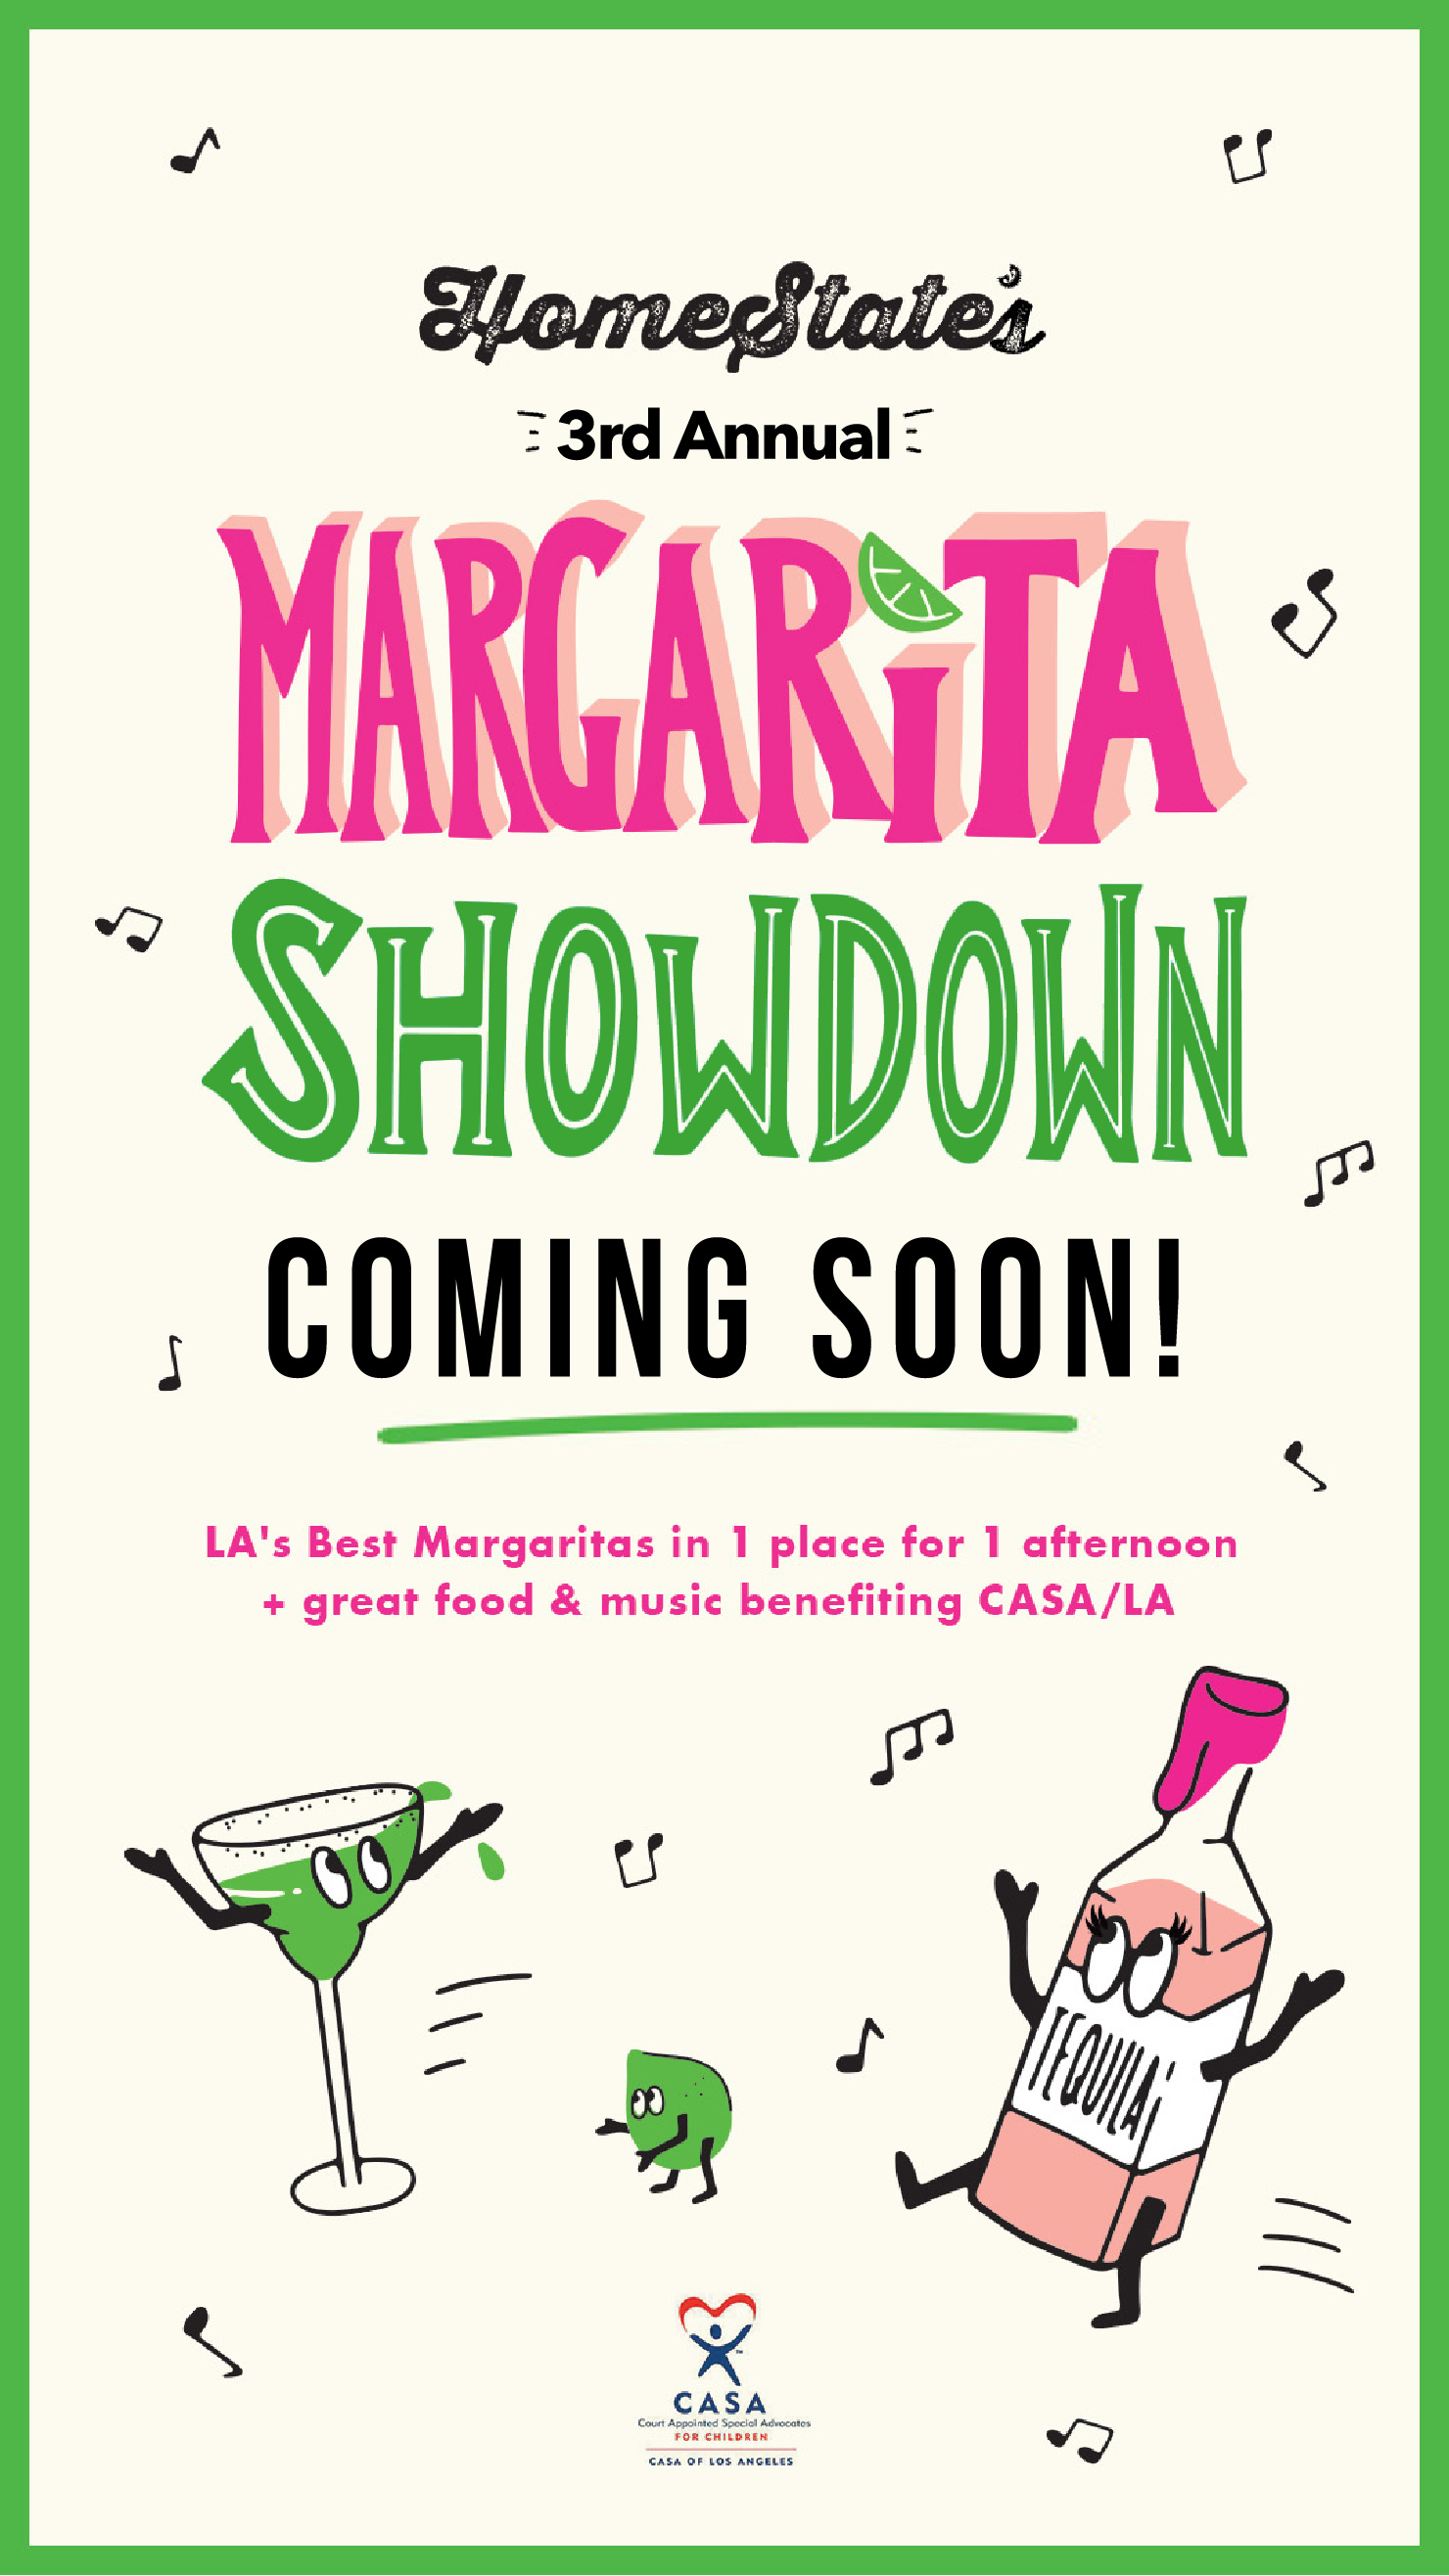 Margarita Showdown Coming Soon!